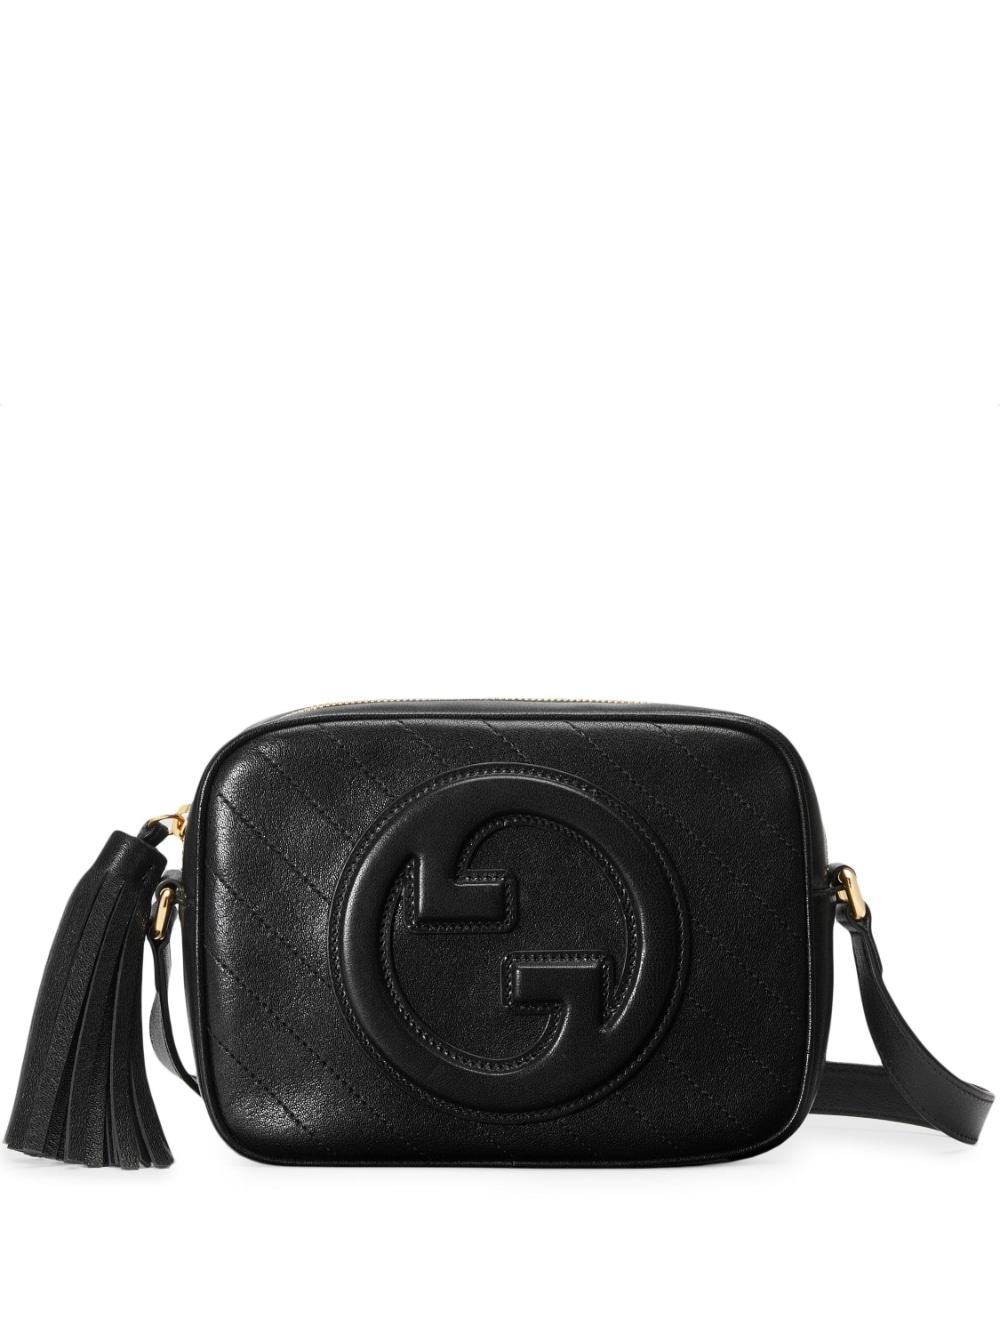 Gucci Blondie Leather Crossbody Bag in Black | Lyst